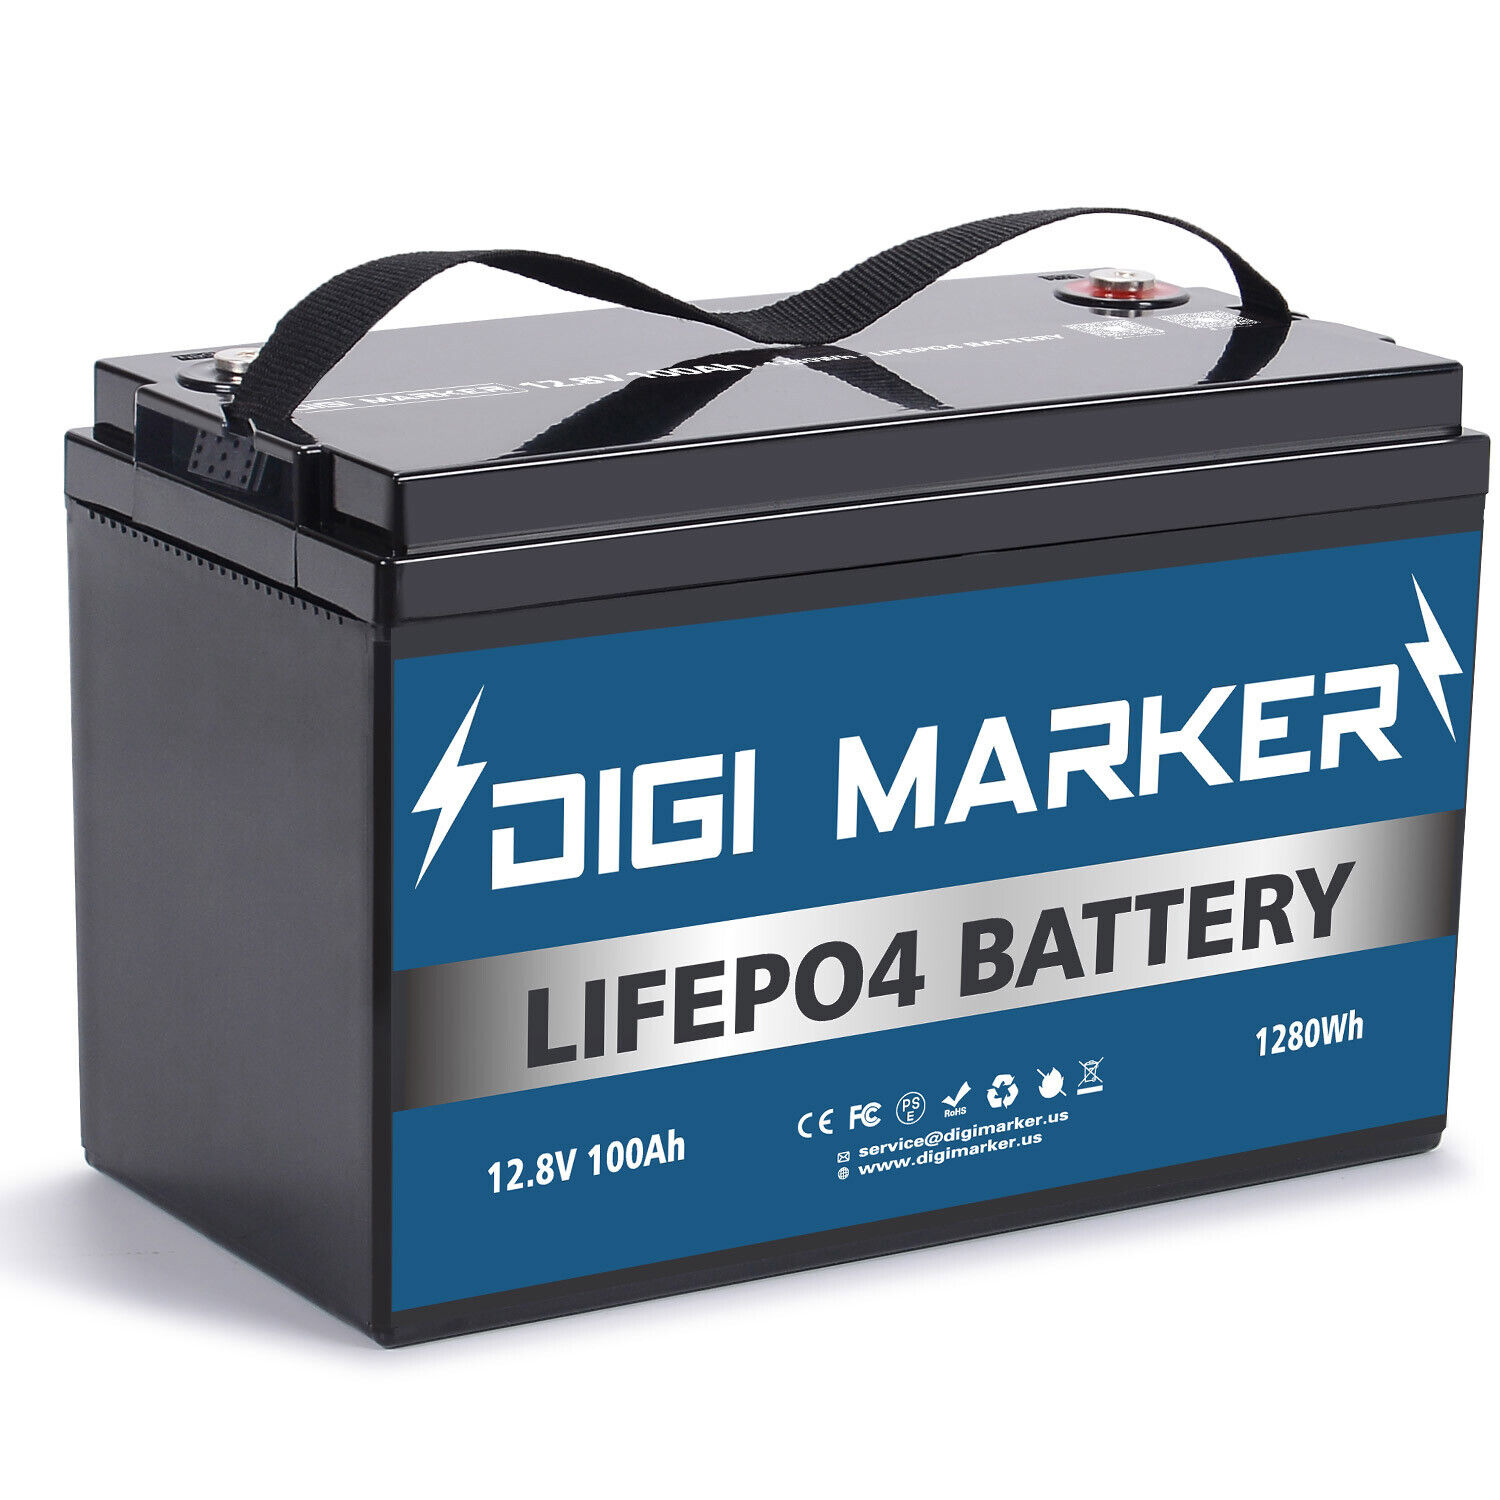 Bluetooth100Ah Lithium Battery,12.8V 100Ah LiFePO4 Deep Cycle